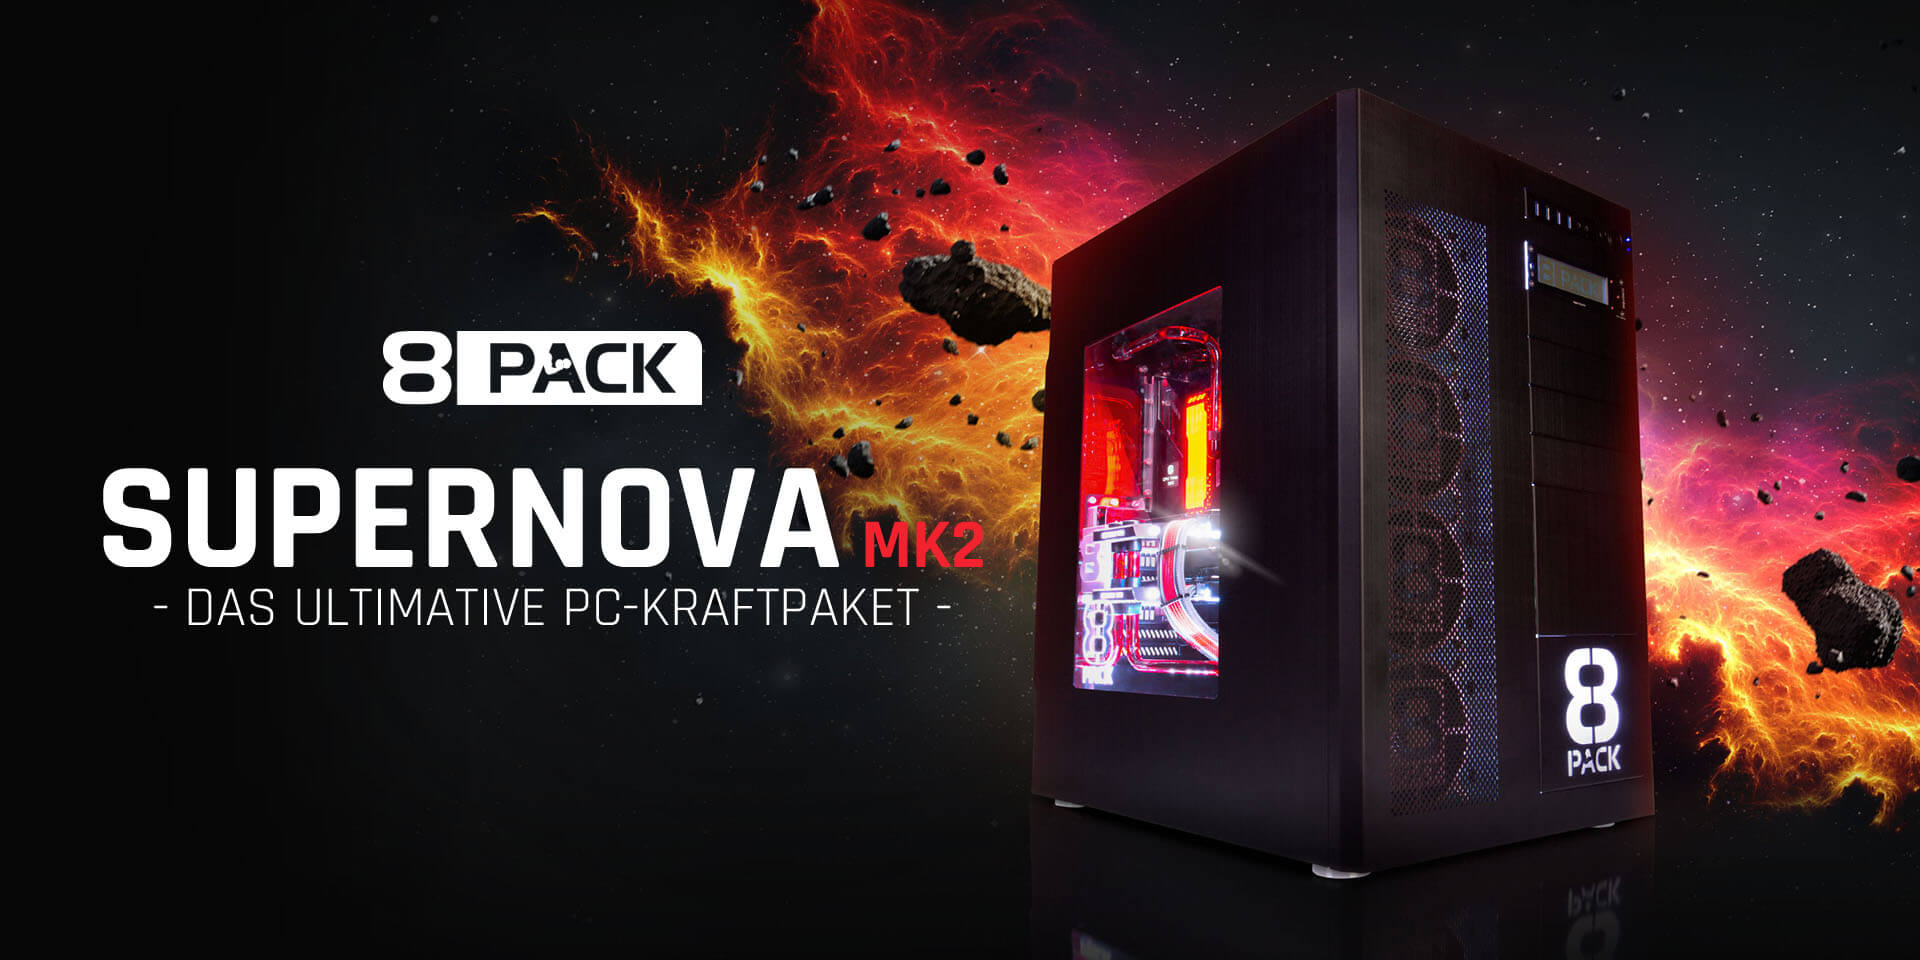 8Pack Supernova MK2 – Threadripper Pro komplett entfesselt